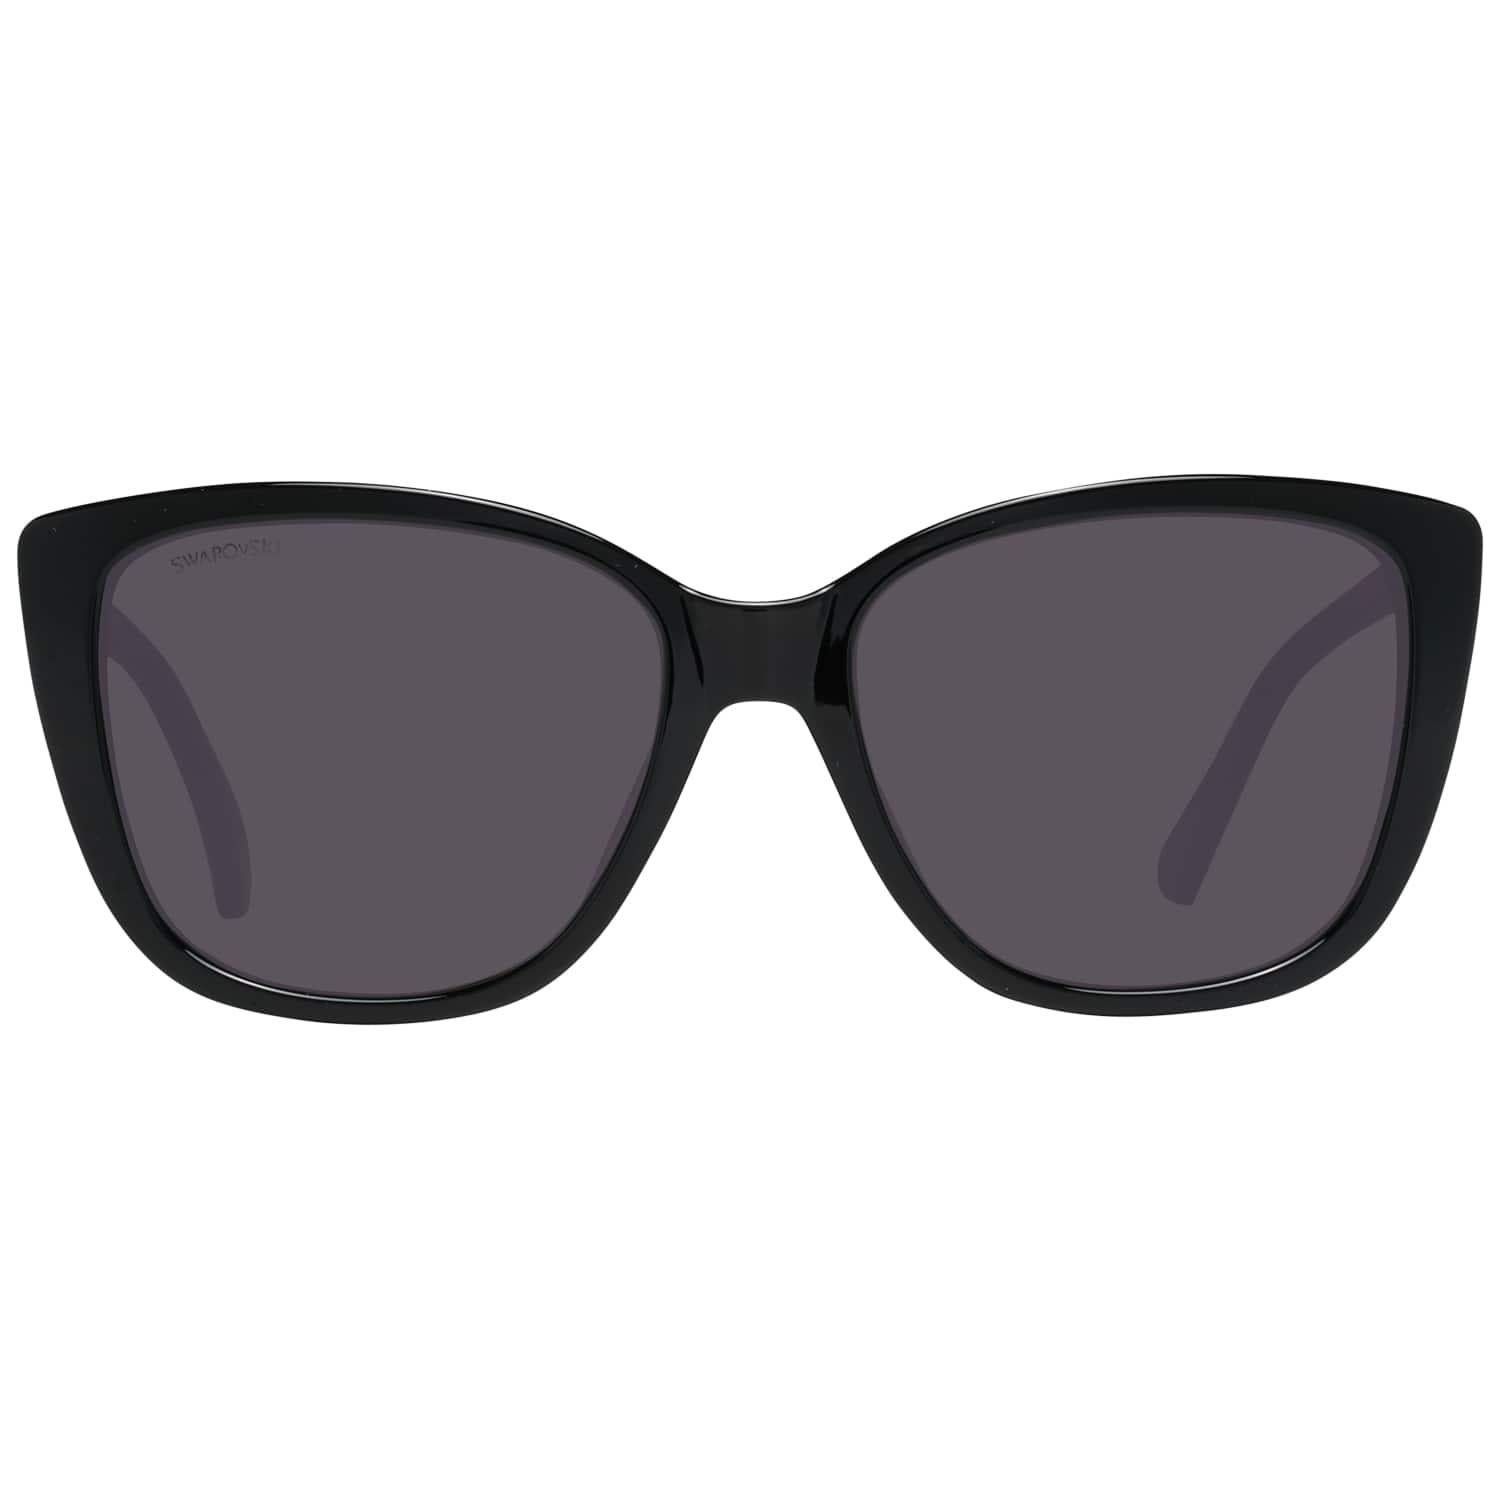 Swarovski Mint Women Black Sunglasses SK0234-H 5401B 54-17-130 mm